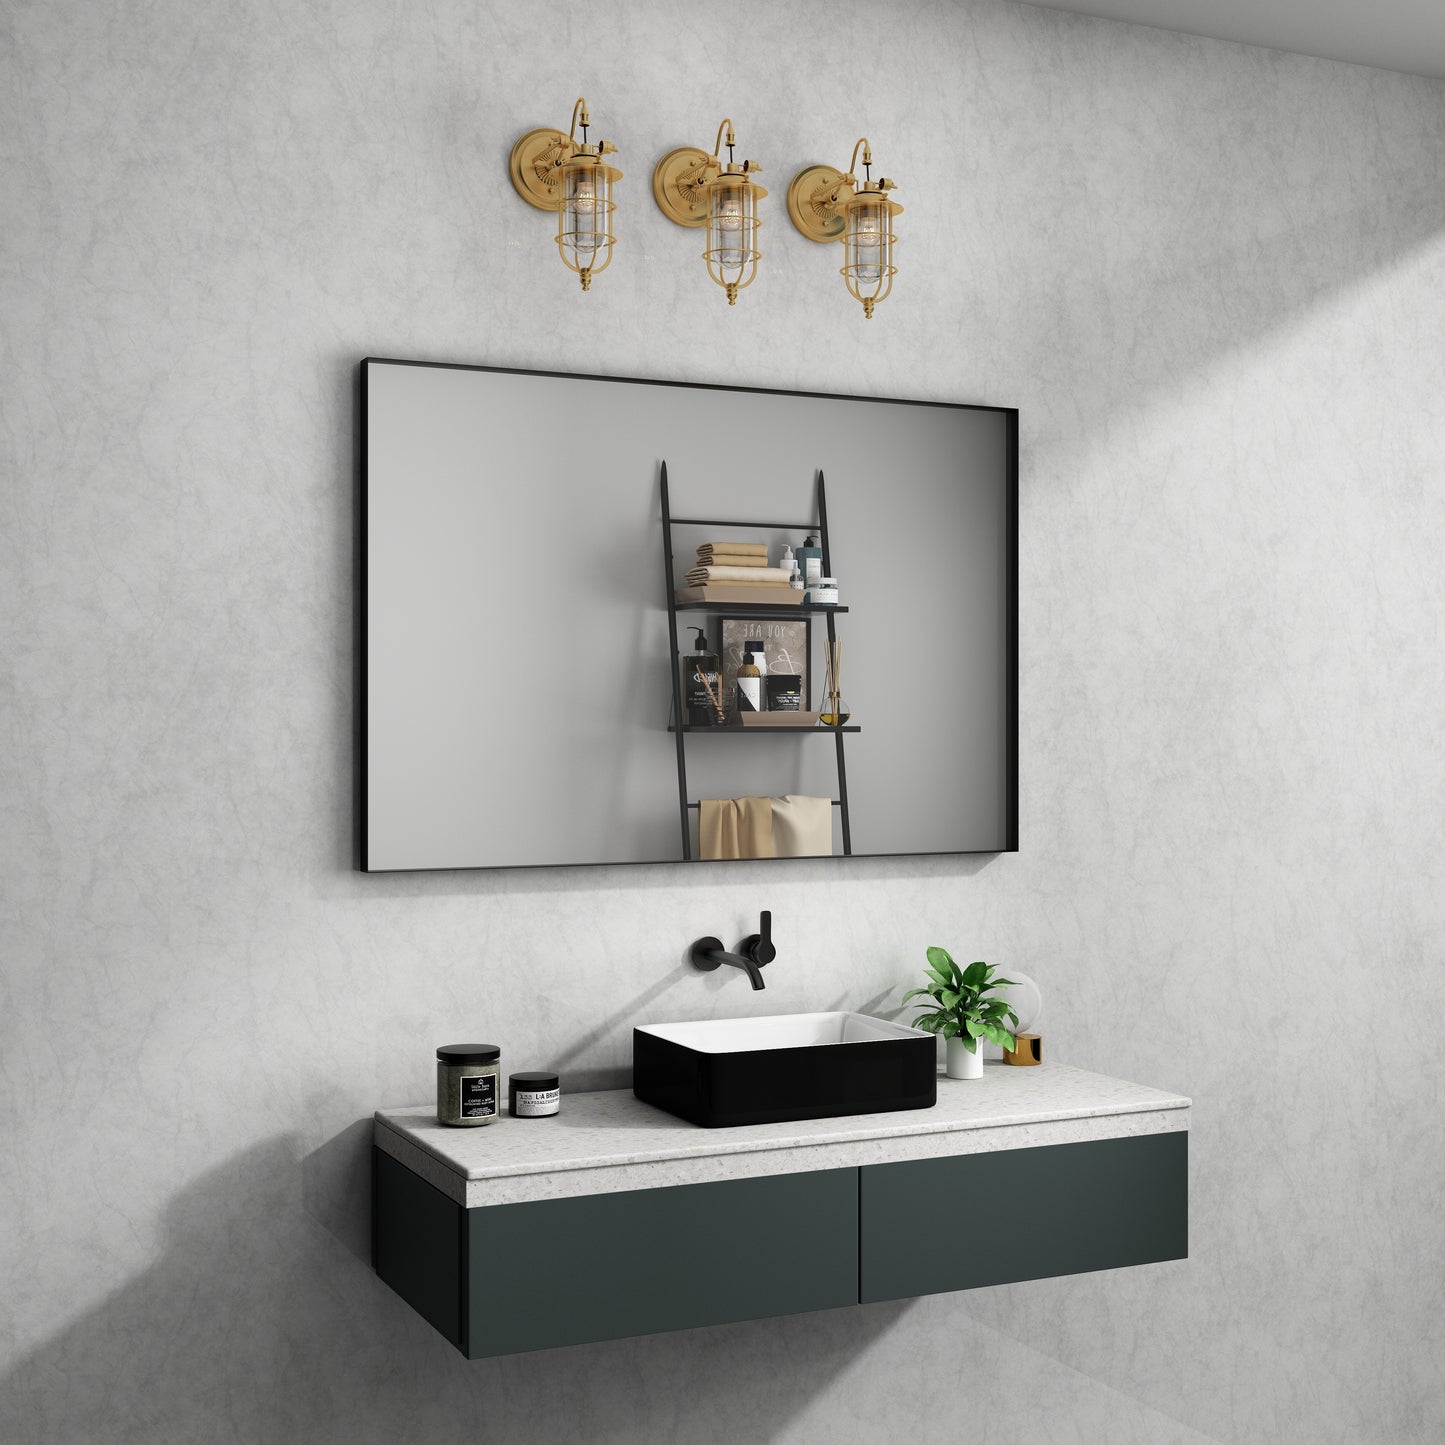 Waterpar® 48 in. W x 32 in. H Rectangular Aluminum Framed Wall Bathroom Vanity Mirror